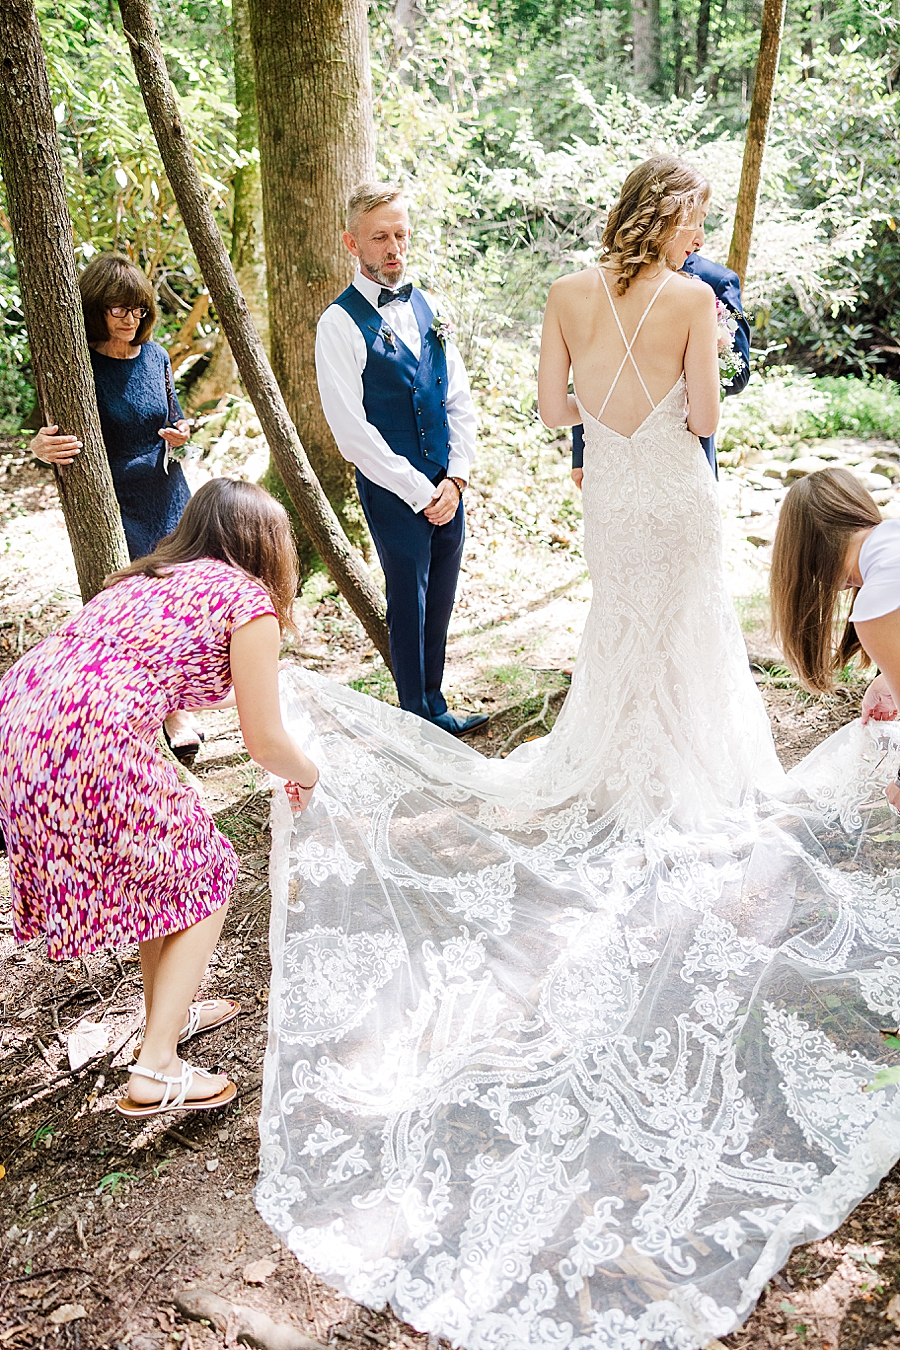 fluffing the wedding dress